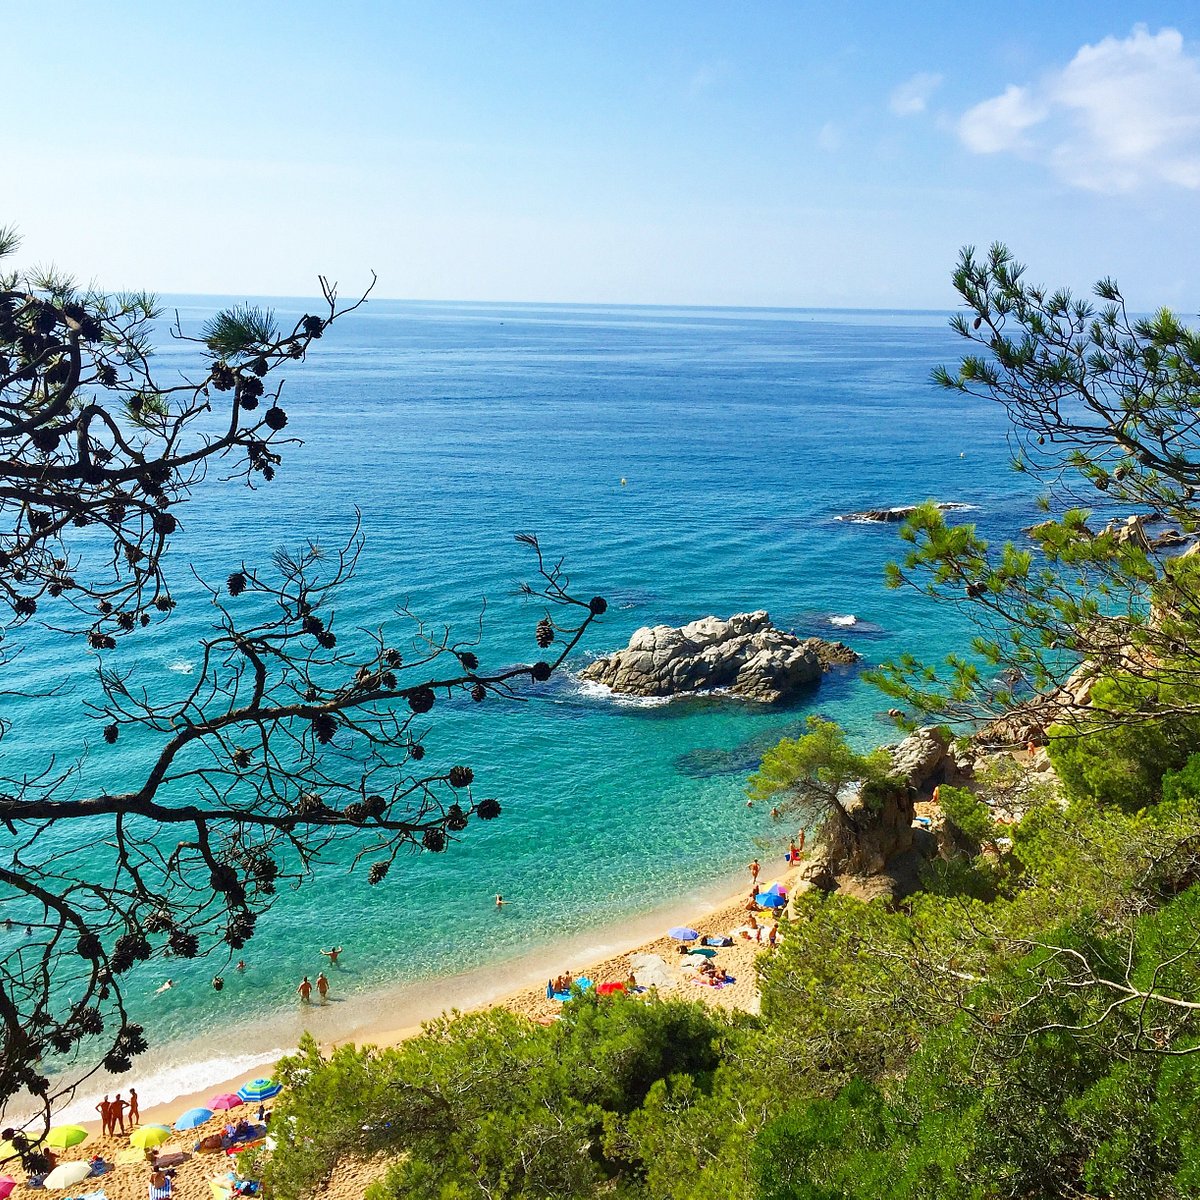 Hot Real Nude Beach Voyeur - Playa Cala Sa Boadella (Lloret de Mar) - All You Need to Know BEFORE You Go